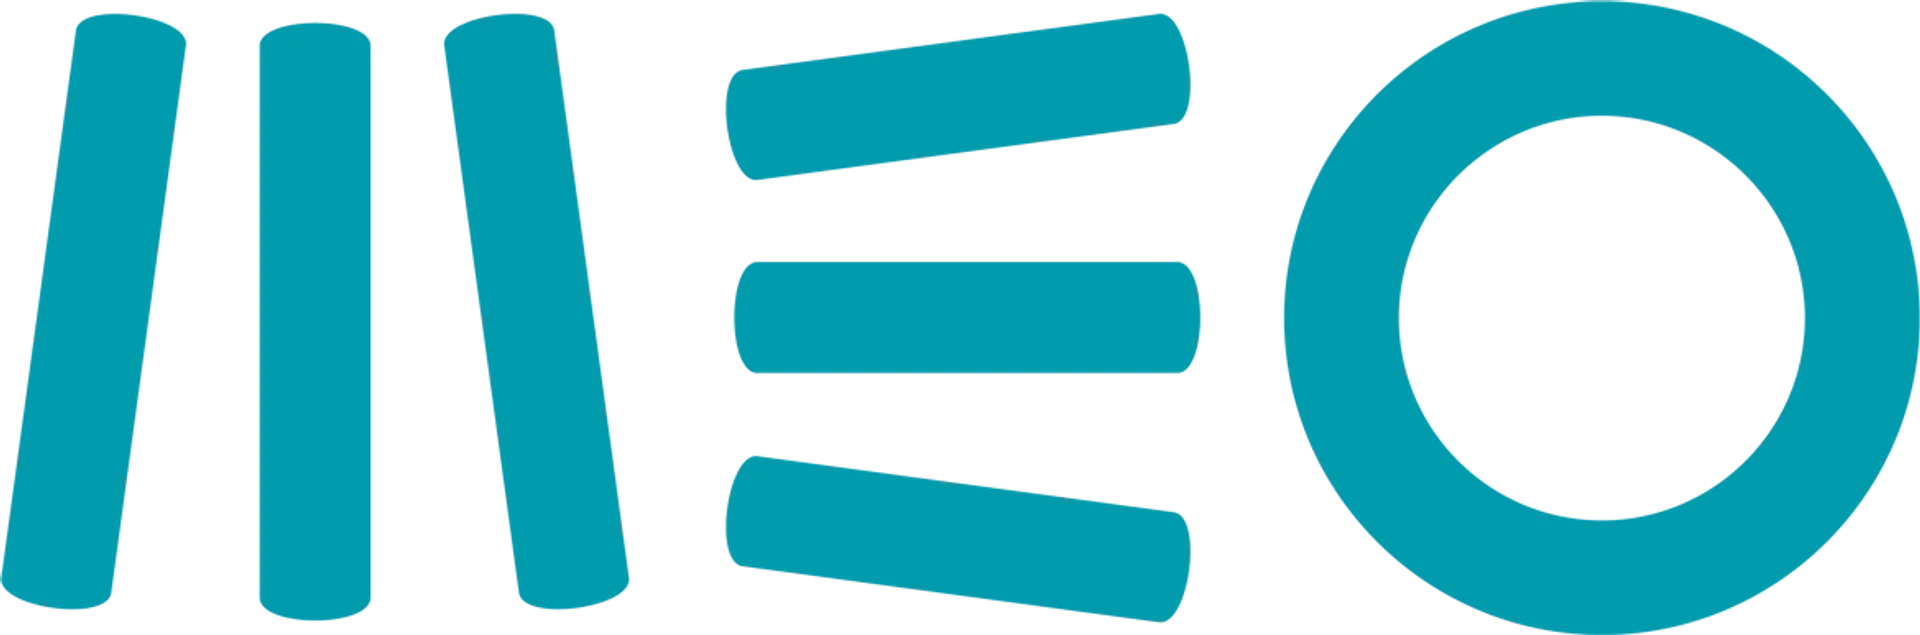 MEO logo